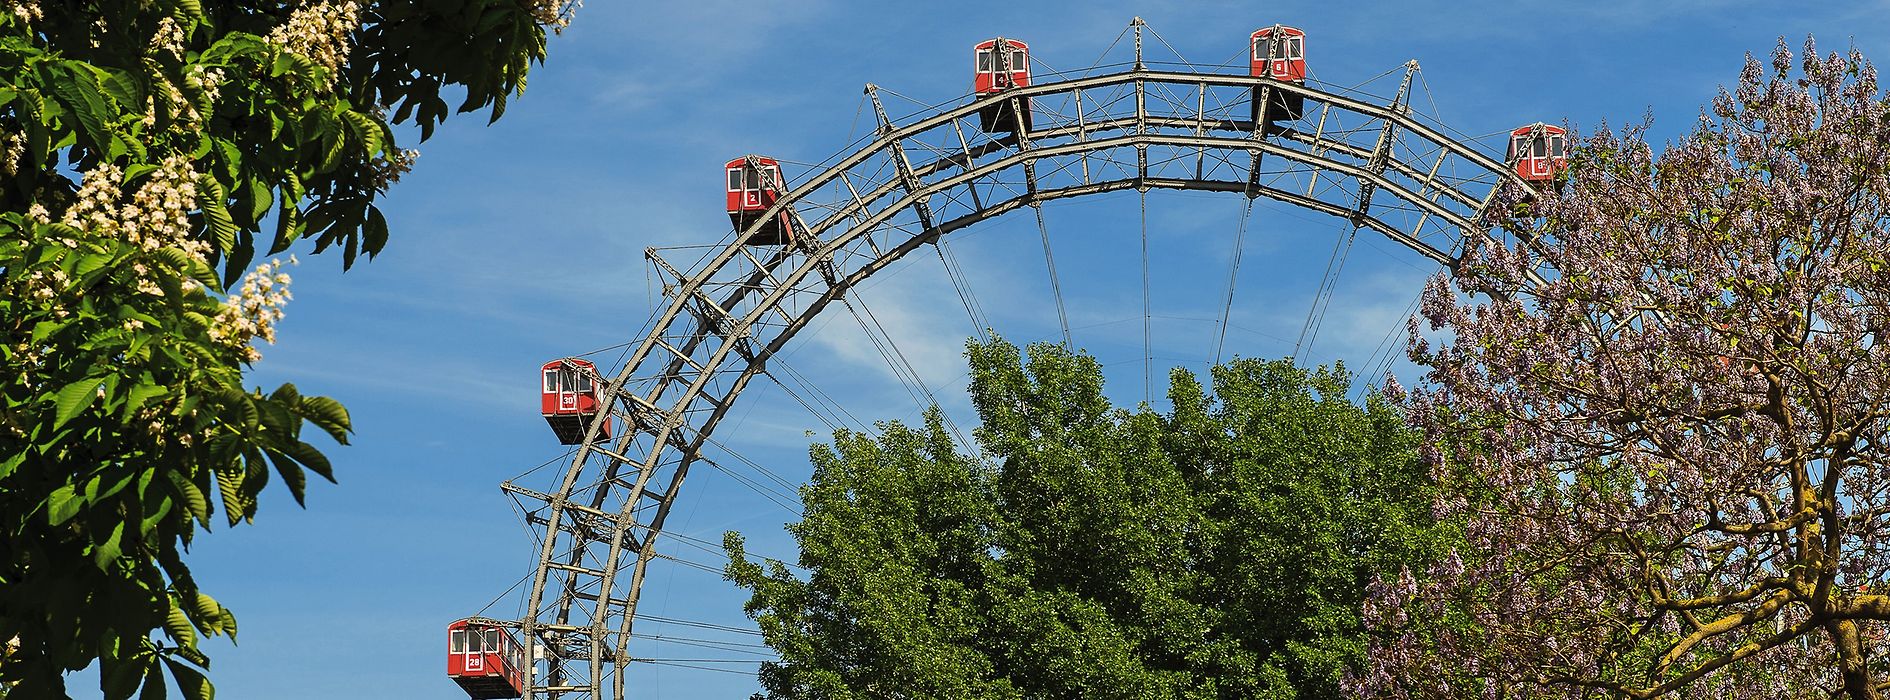 Giant ferris wheel